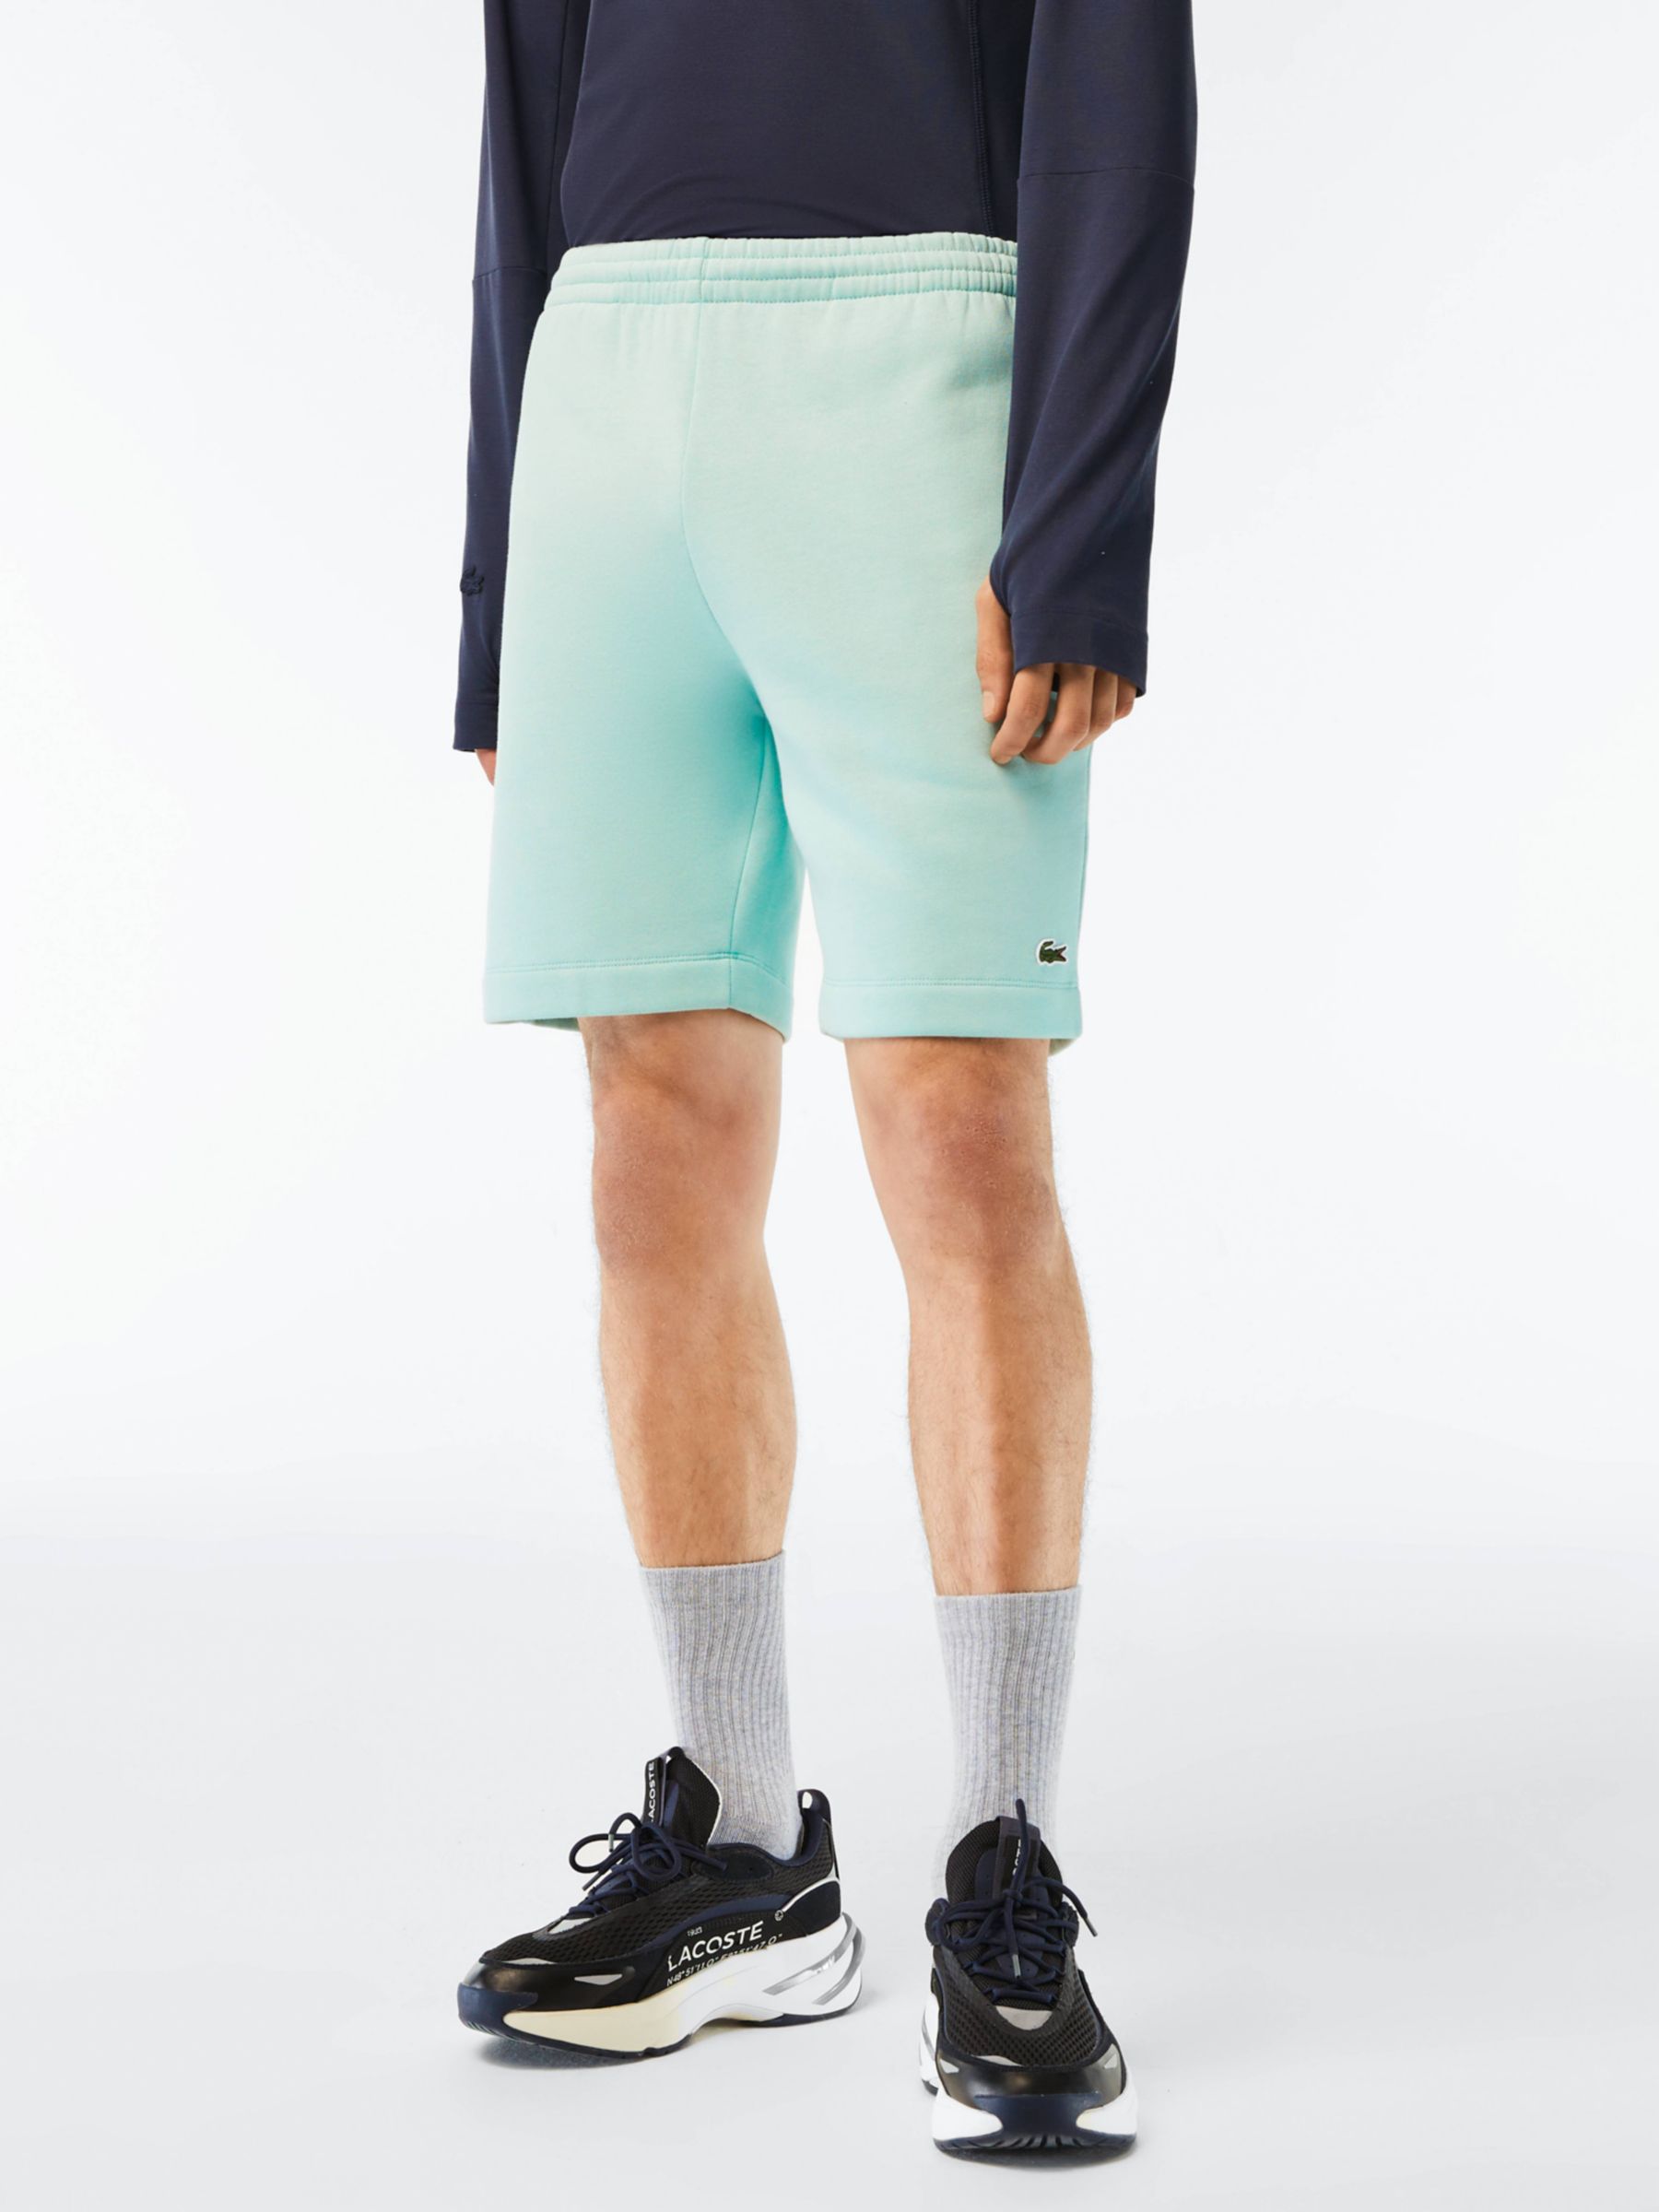 Lacoste Shorts, Mint Green,